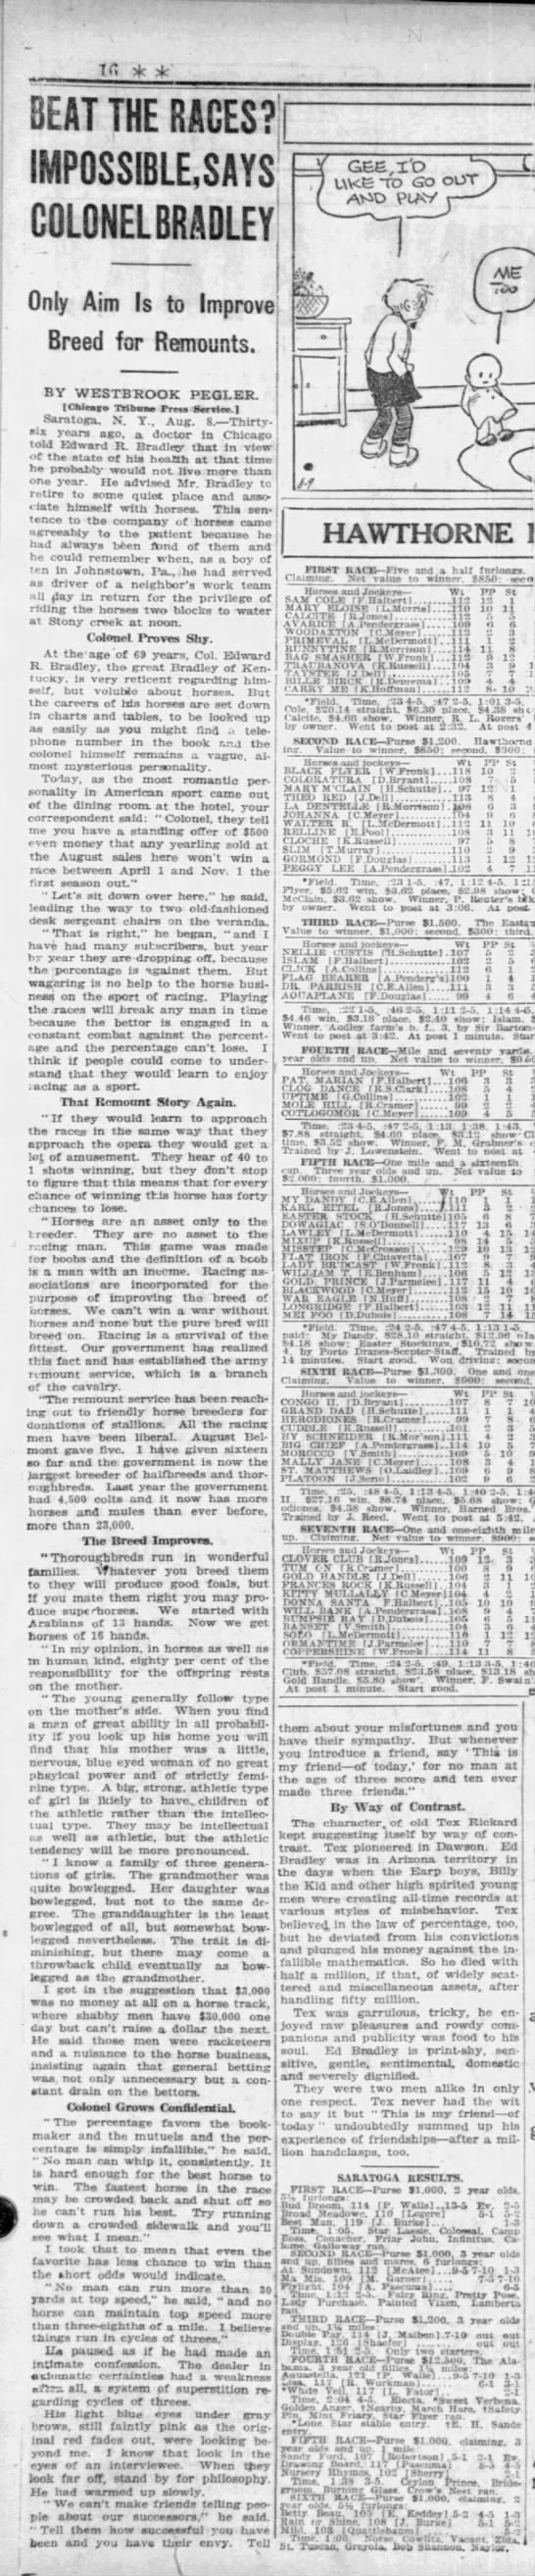 Chicago Tribune Westbrook Pegler interview with Bradley 9 Aug 1929 - 